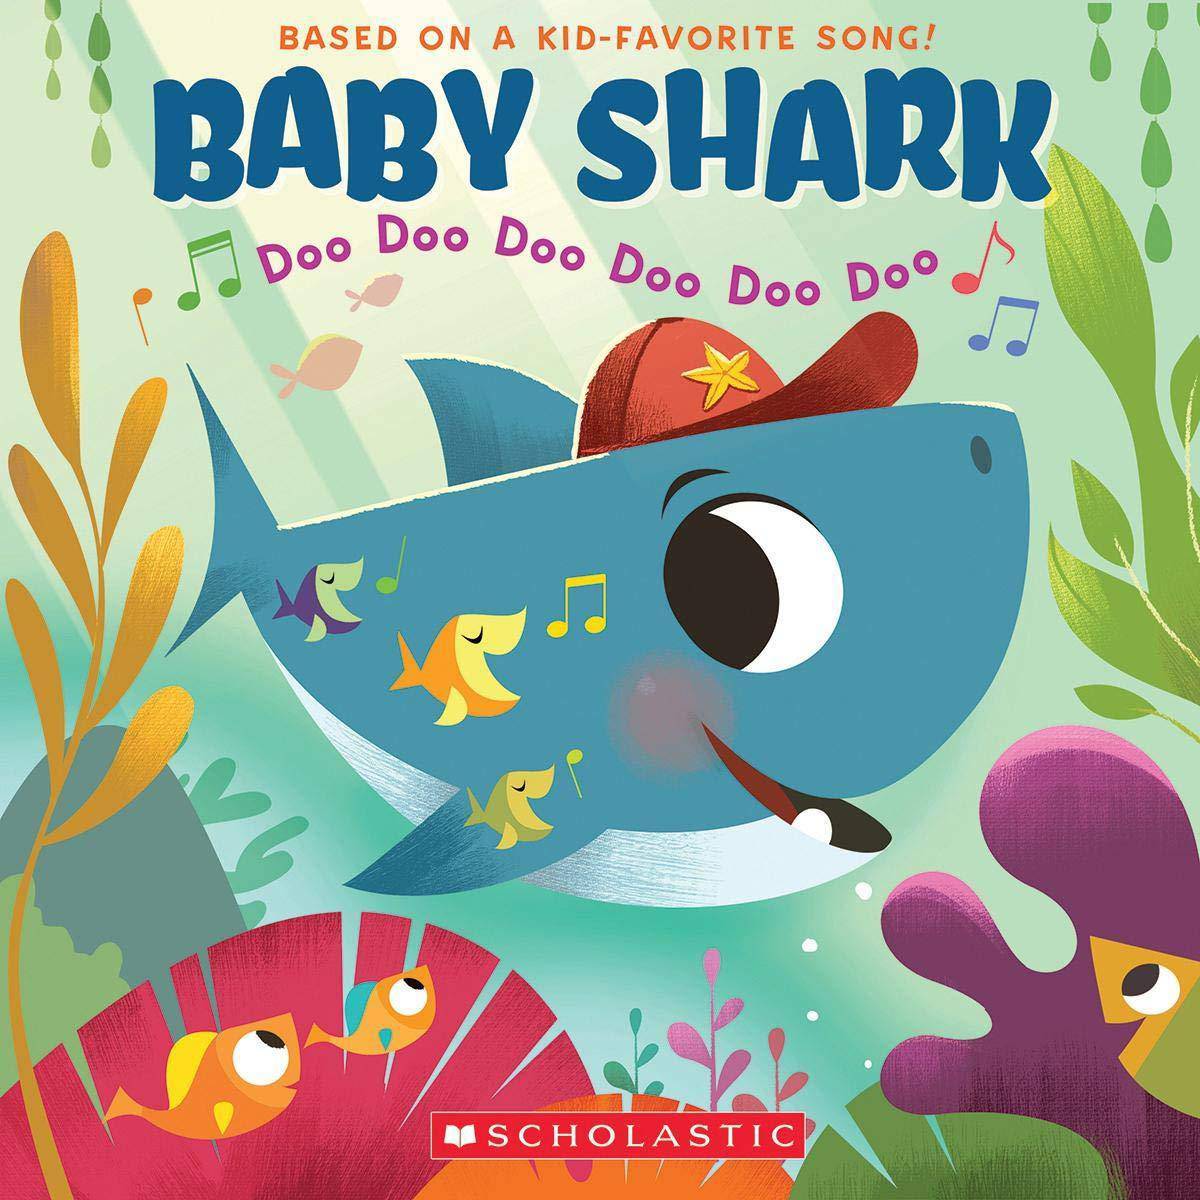 Baby Shark - SureShot Books Publishing LLC